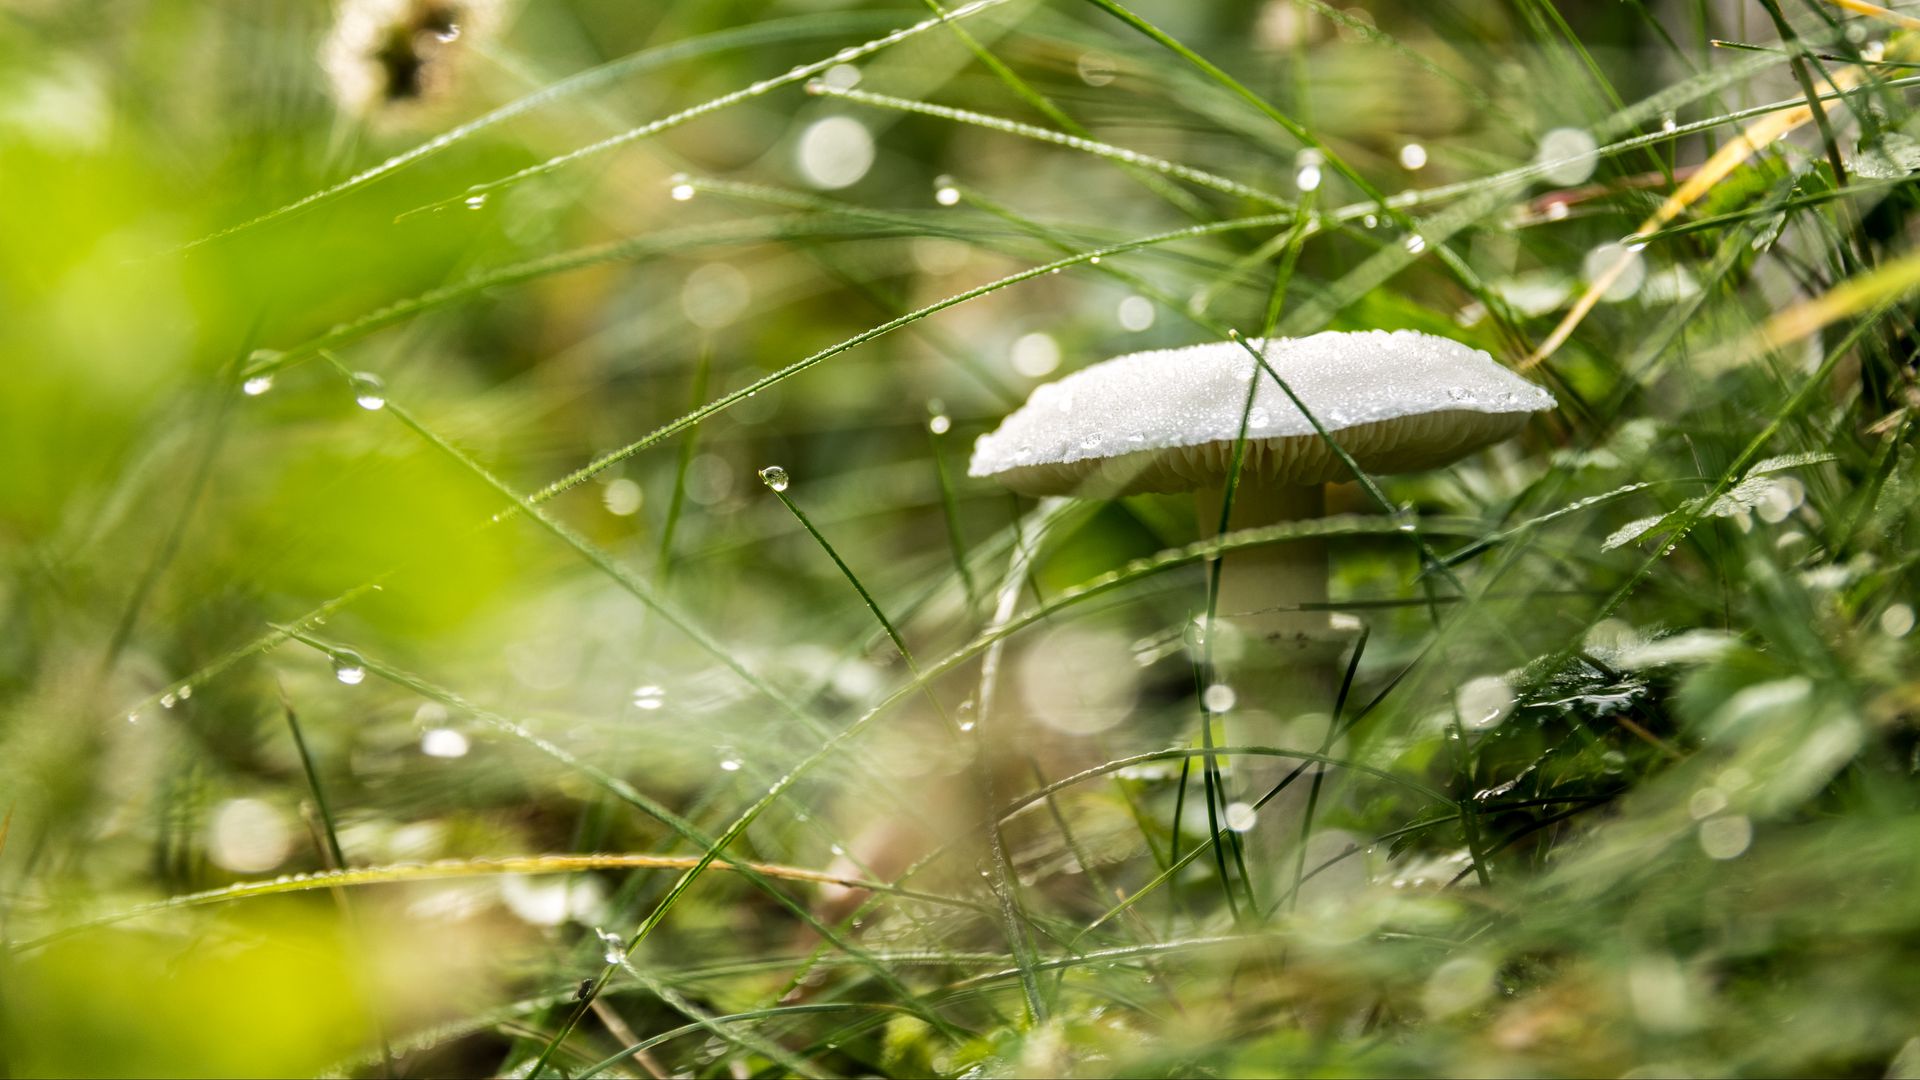 Download wallpaper 1920x1080 mushroom, grass, drops, rain, macro full ...